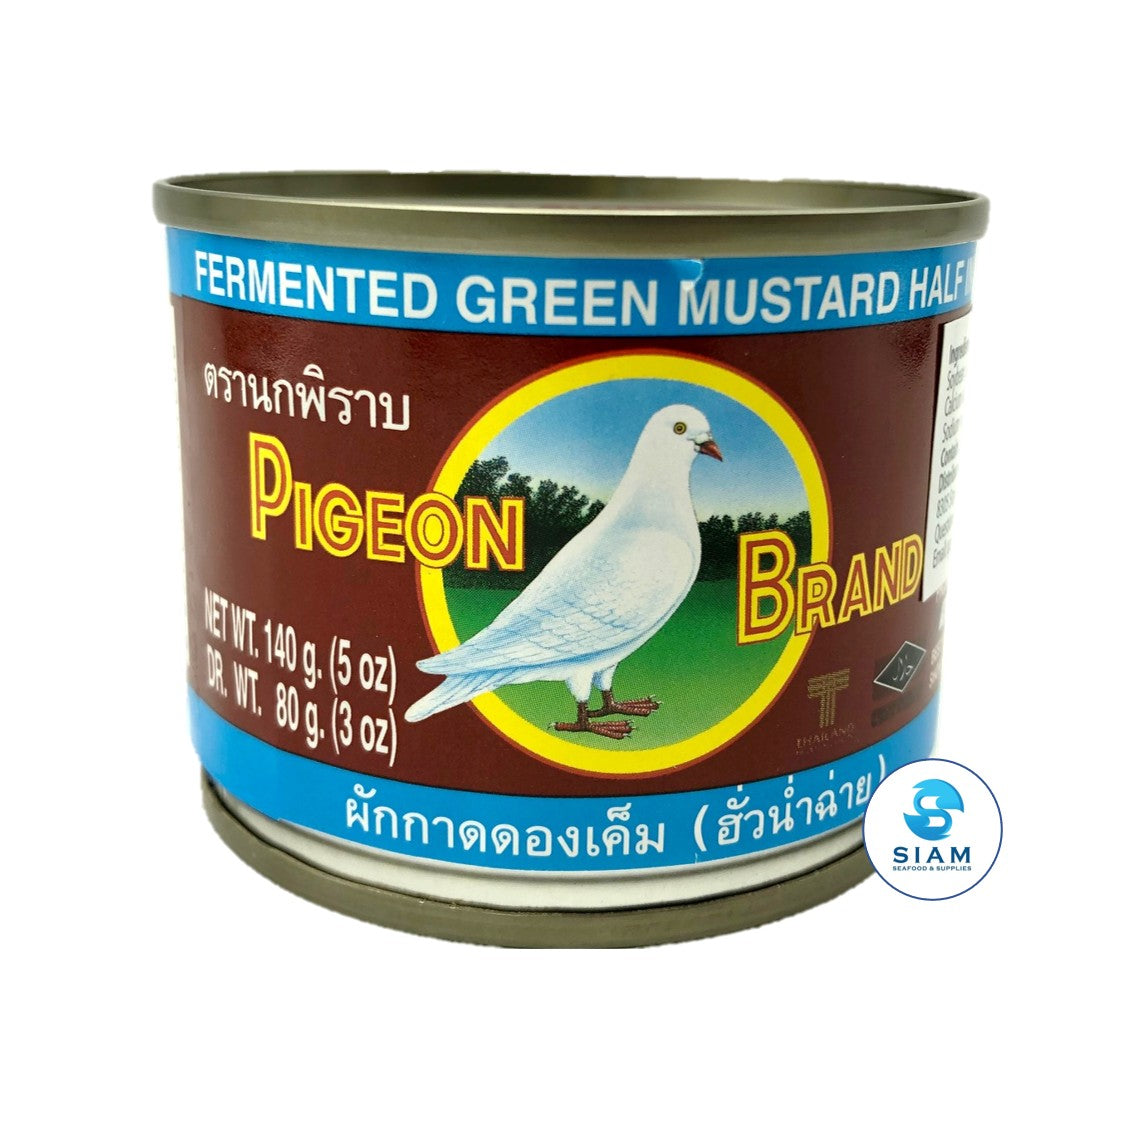 Fermented Green Mustard Half in Soy Sauce (Hua Nam Chai) - Pigeon Brand (Drain Wt 3 oz - Net Wt 6.5 oz) ผักกาดดองเค็ม (ฮั่วน่ำฉ่าย) ตรานกพิราบ shippable Pigeon